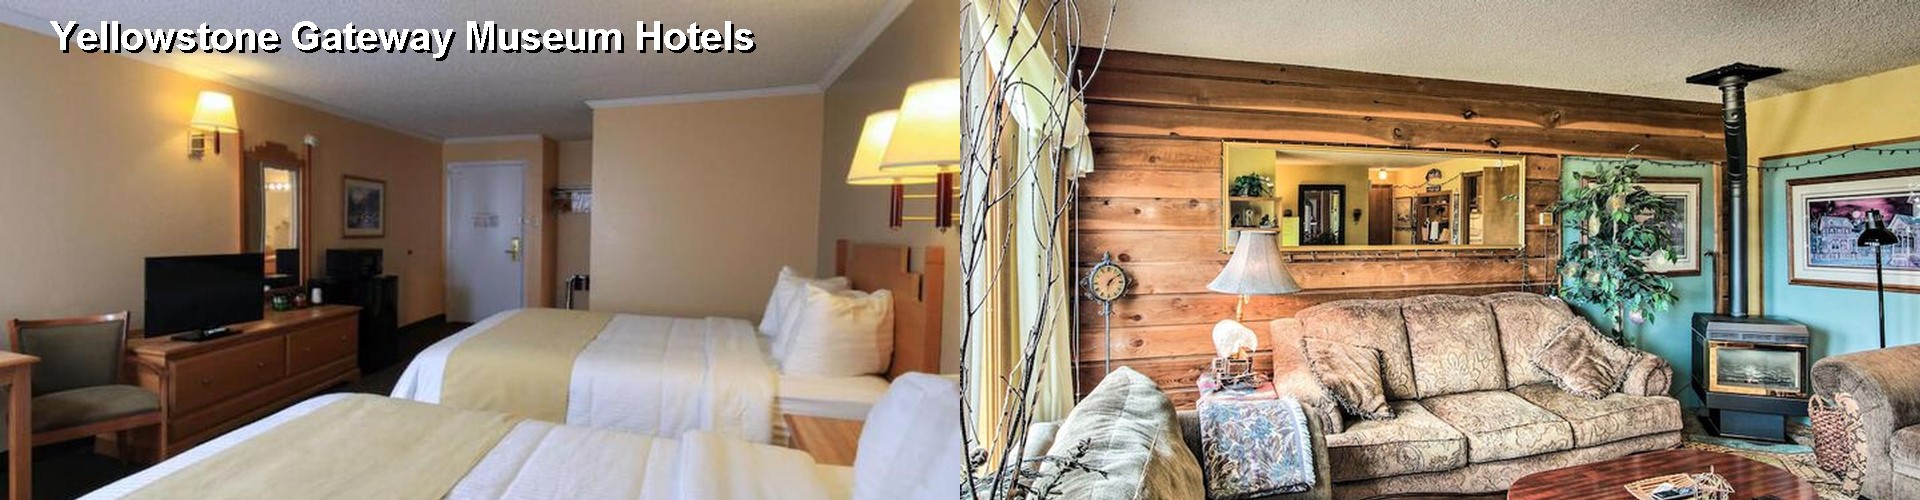 5 Best Hotels near Yellowstone Gateway Museum